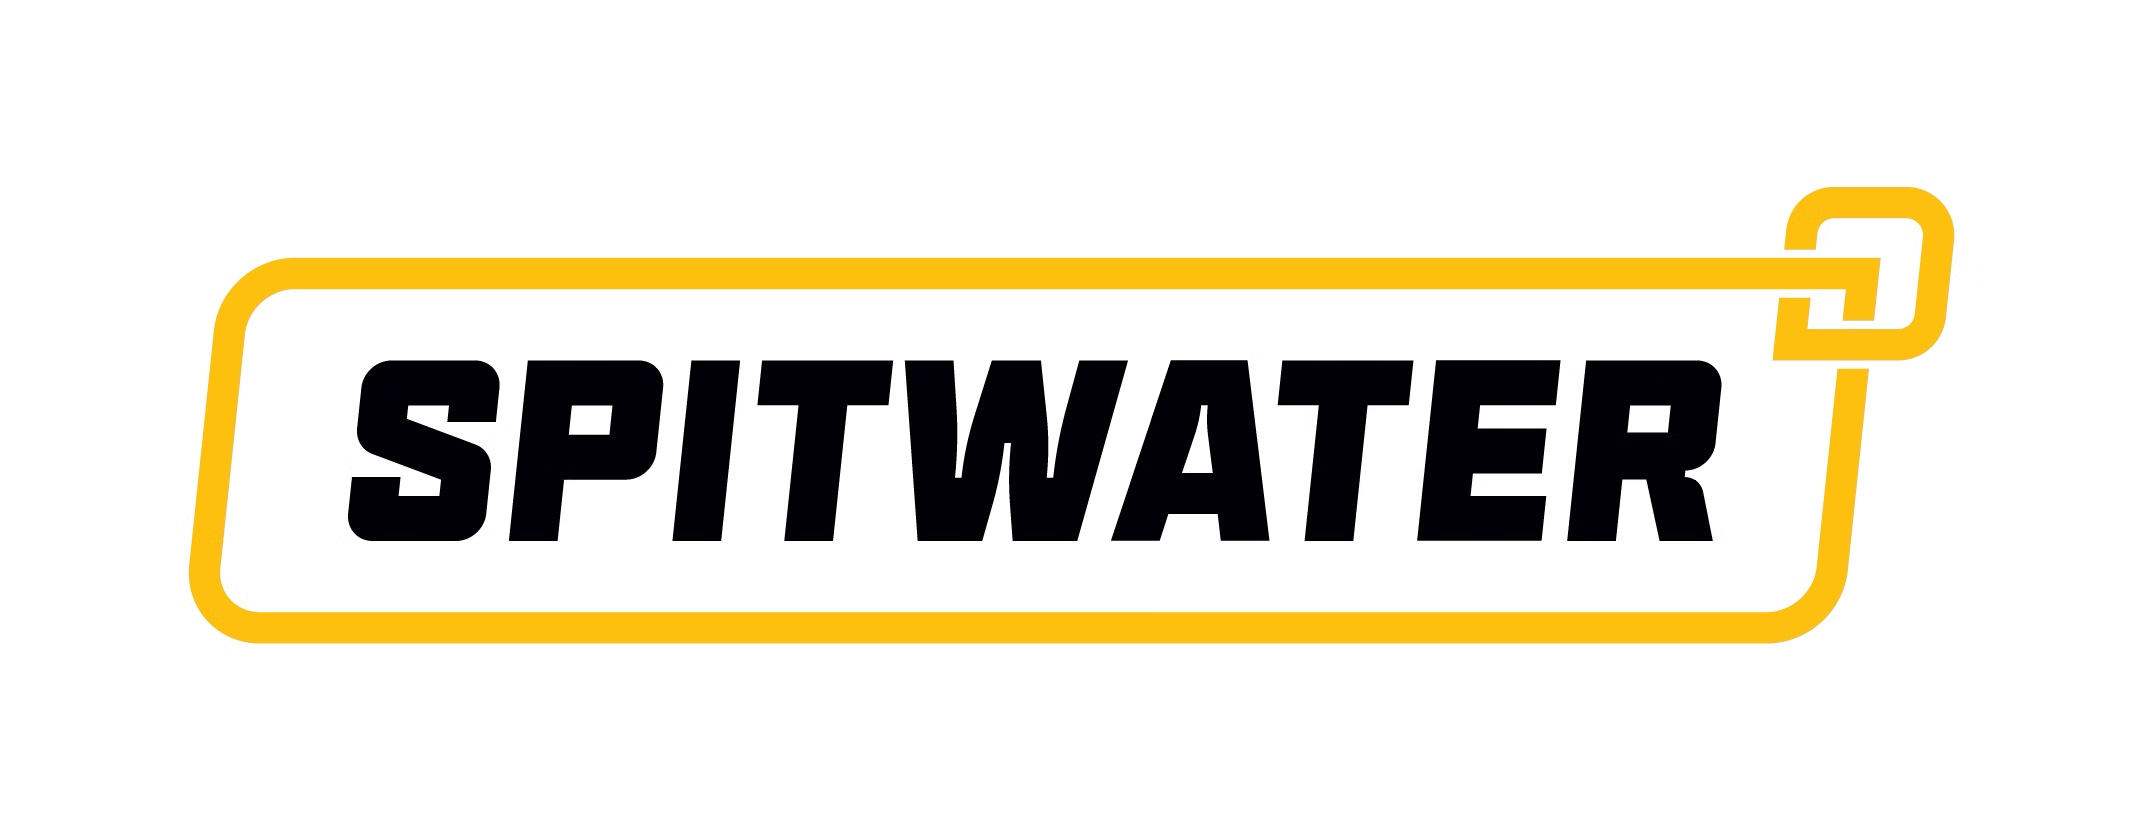 Spitwater Customer Handover Form V2